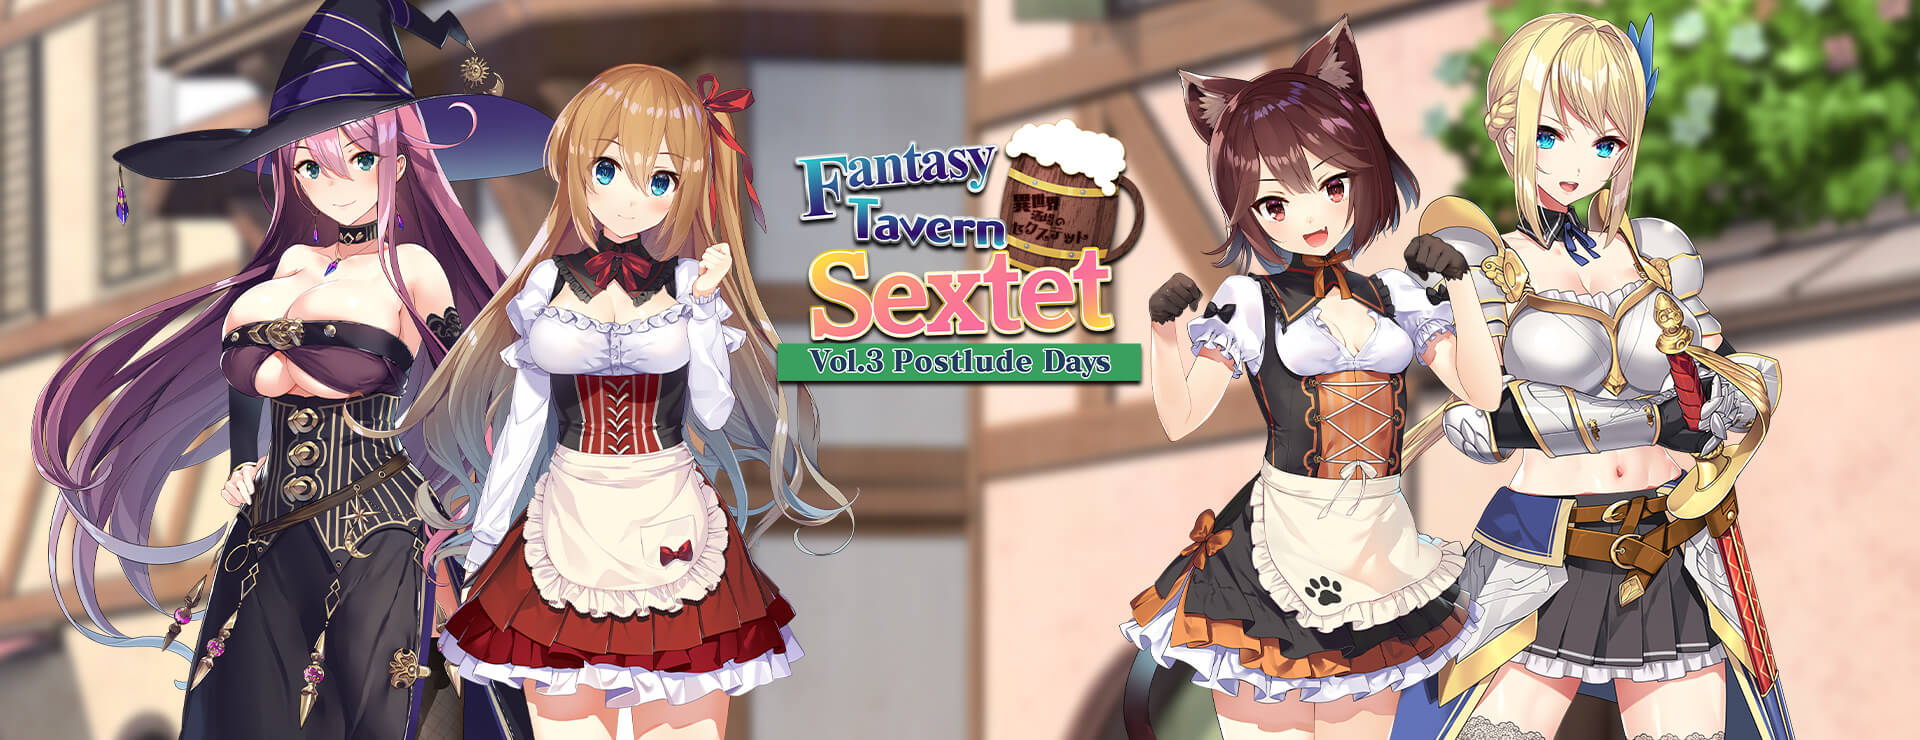 Fantasy Tavern Sextet - Vol.3 Postlude Days - ビジュアルノベル ゲーム